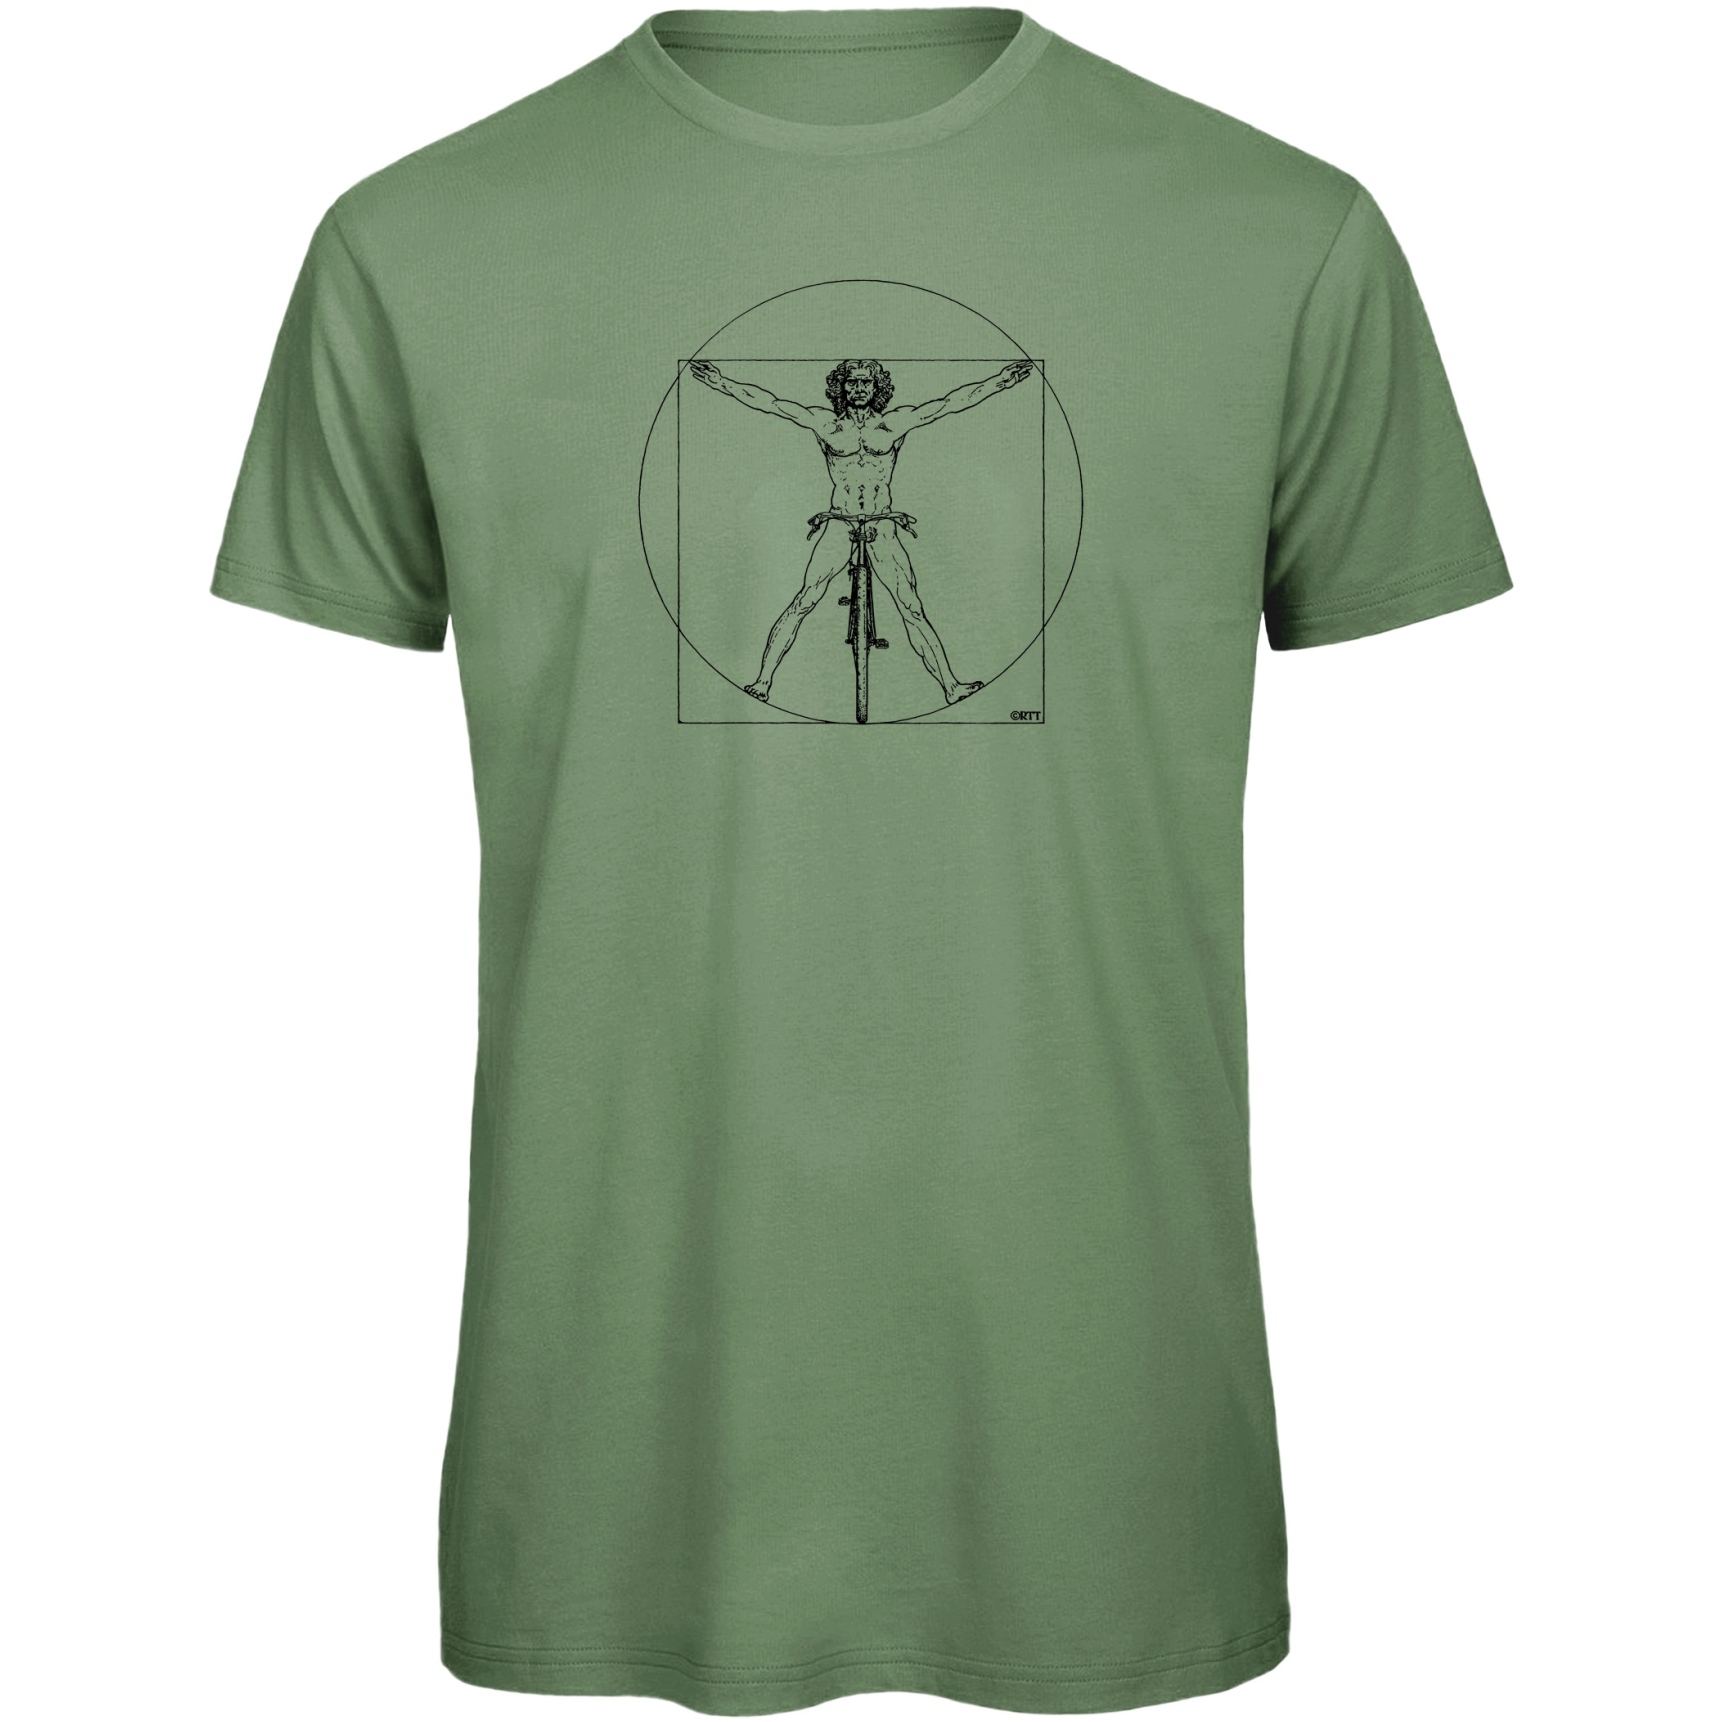 Picture of RTTshirts Bike T-Shirt DaVinci - light green